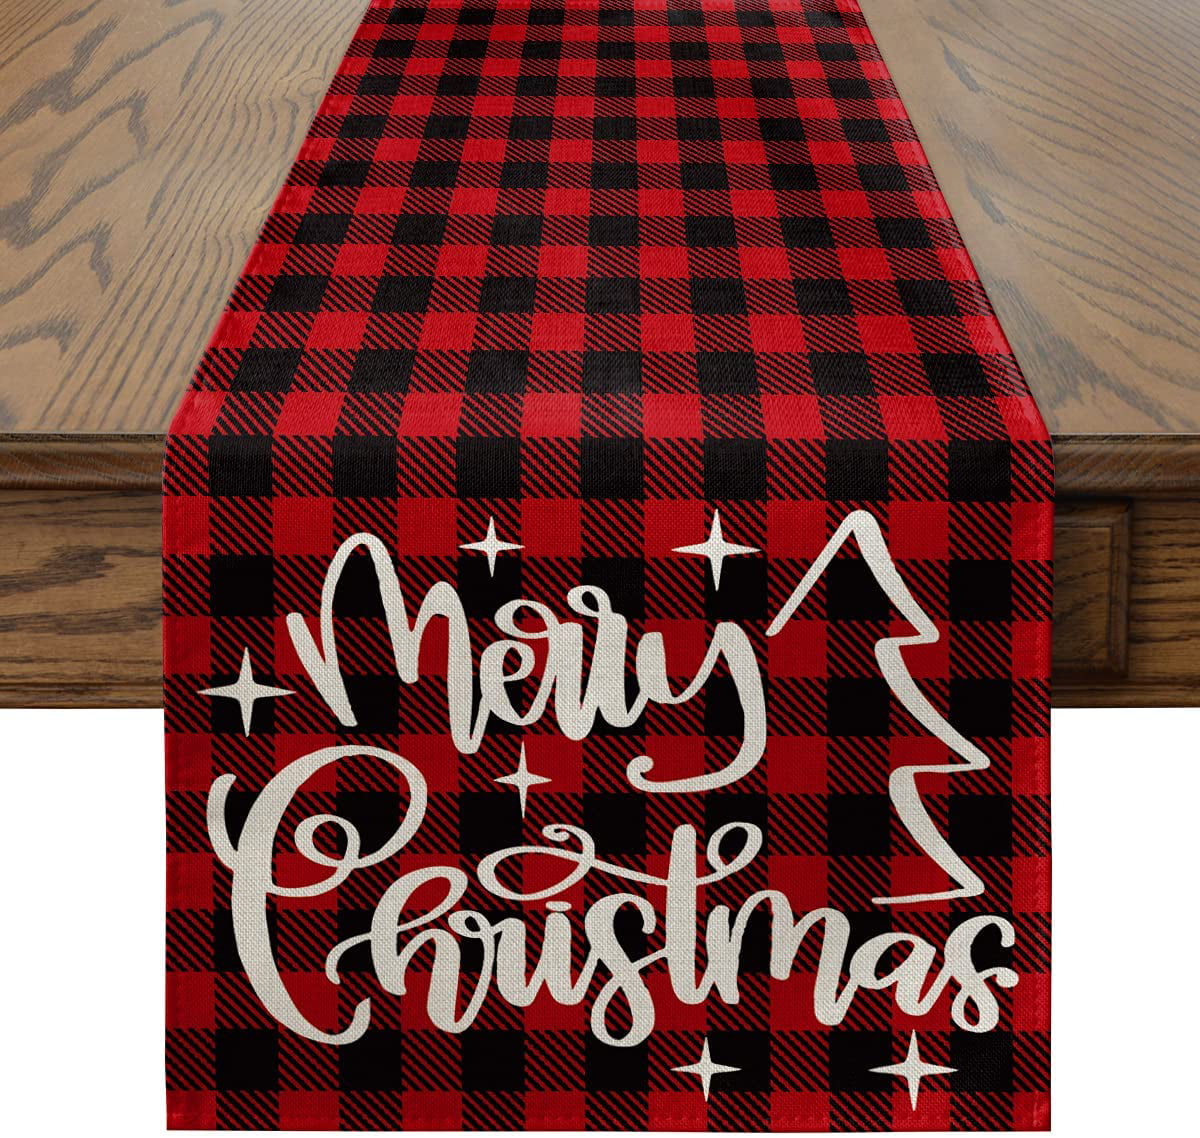 Artoid Mode Buffalo Plaid Scarf Snowman Christmas Decorative Doormat Seasonal Winter Xmas Holiday Low-Profile Floor Mat Switch Mat for Indoor Outdoor 17 x 29 Inch 